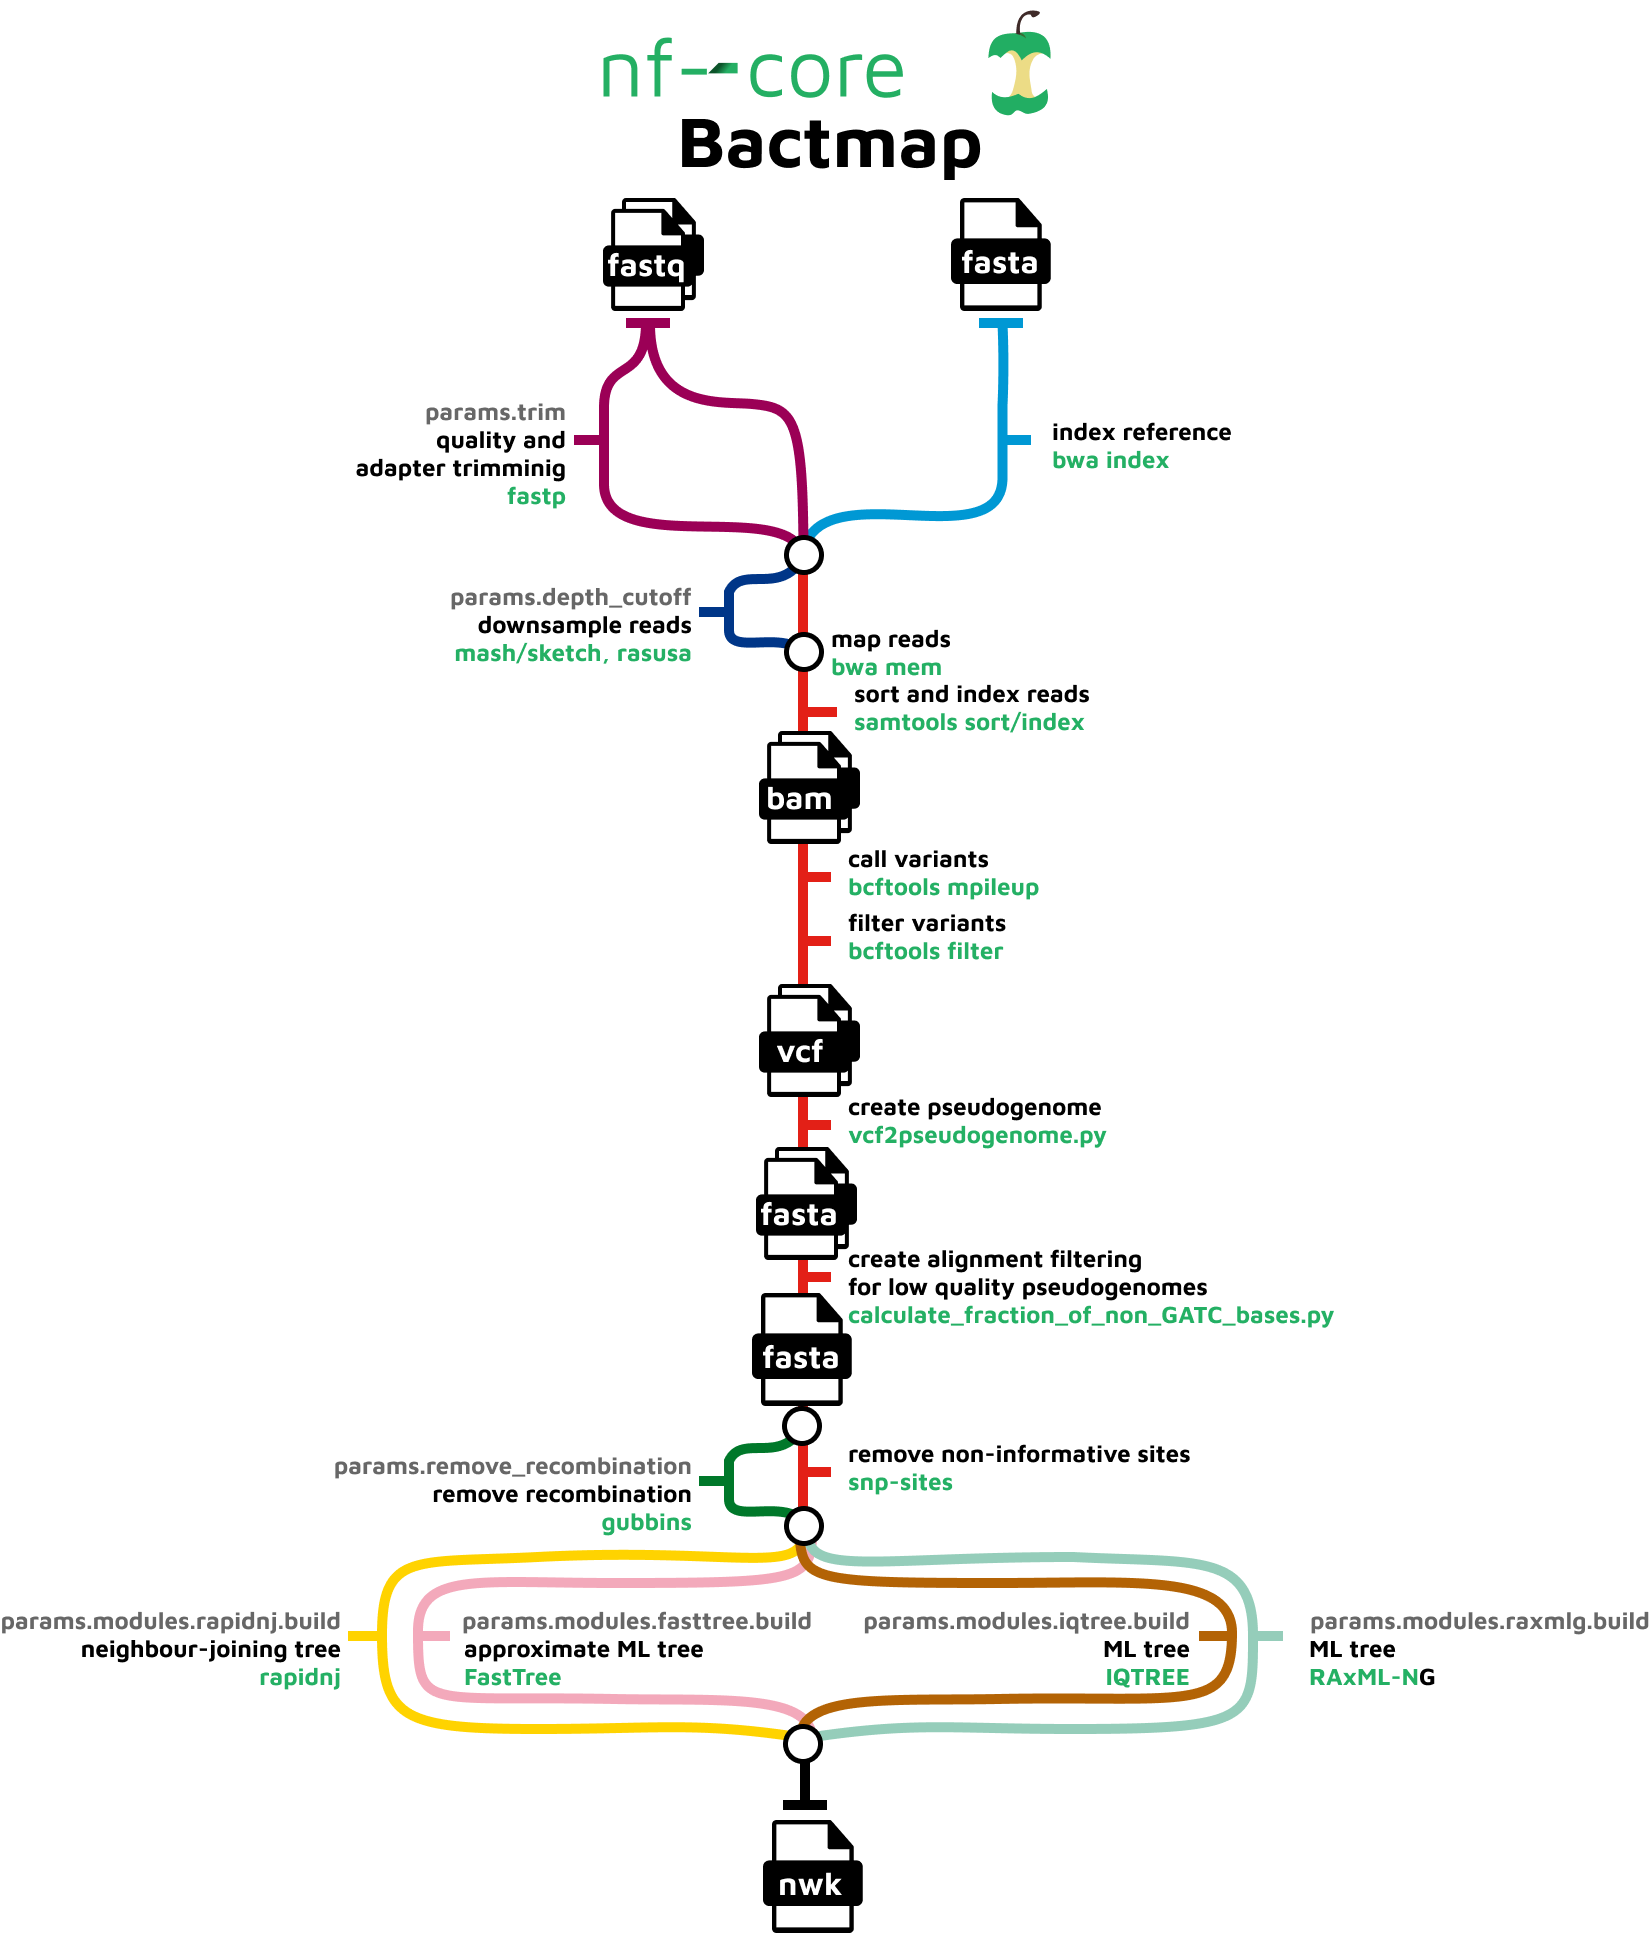 Pipeline summary schematic